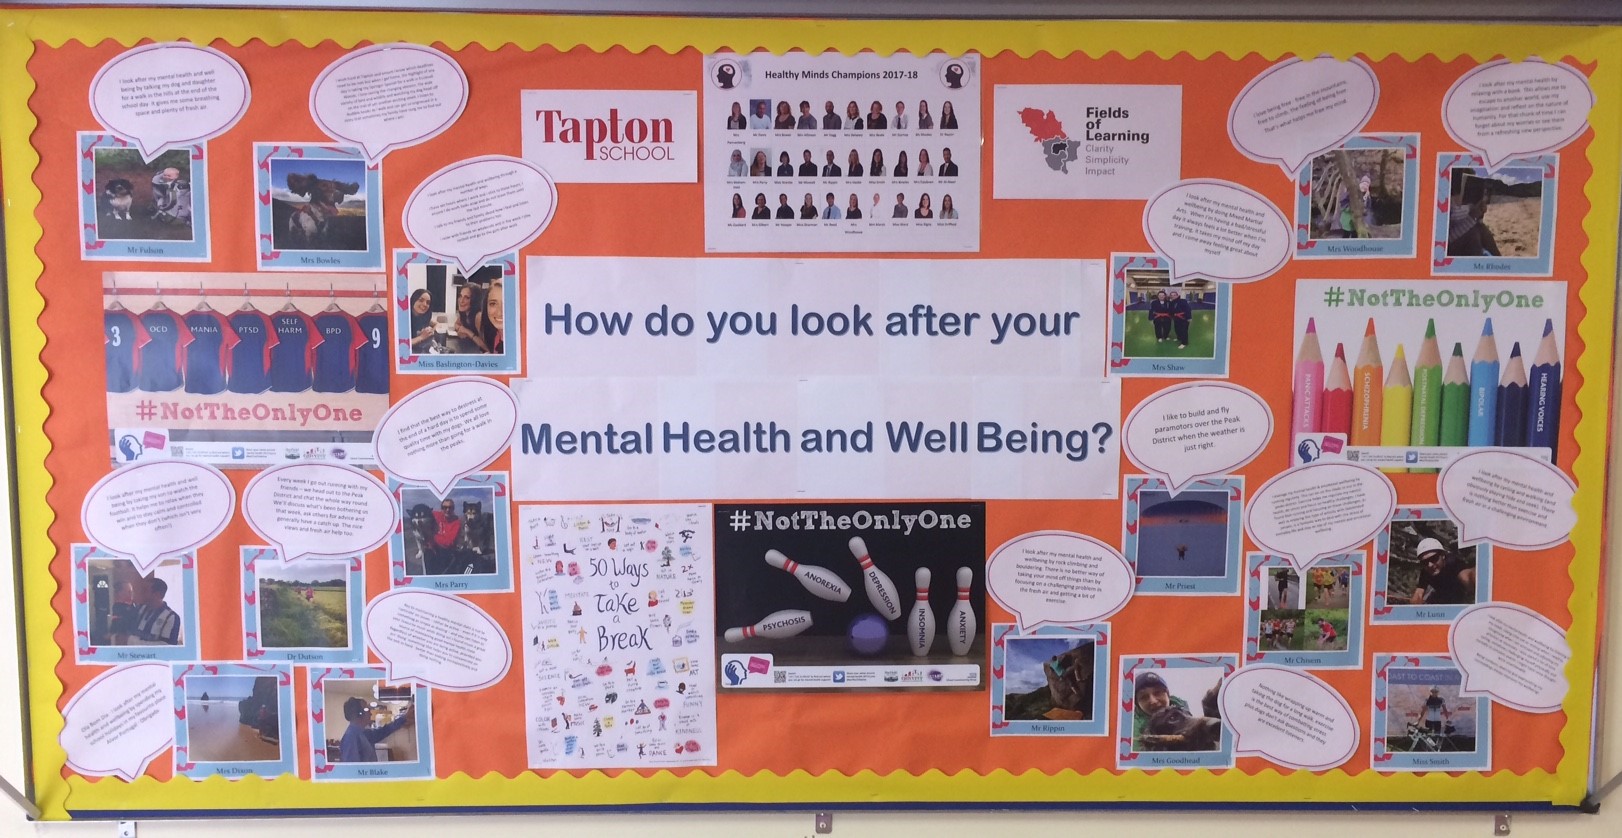 School noticeboard sharing tips for good mental health